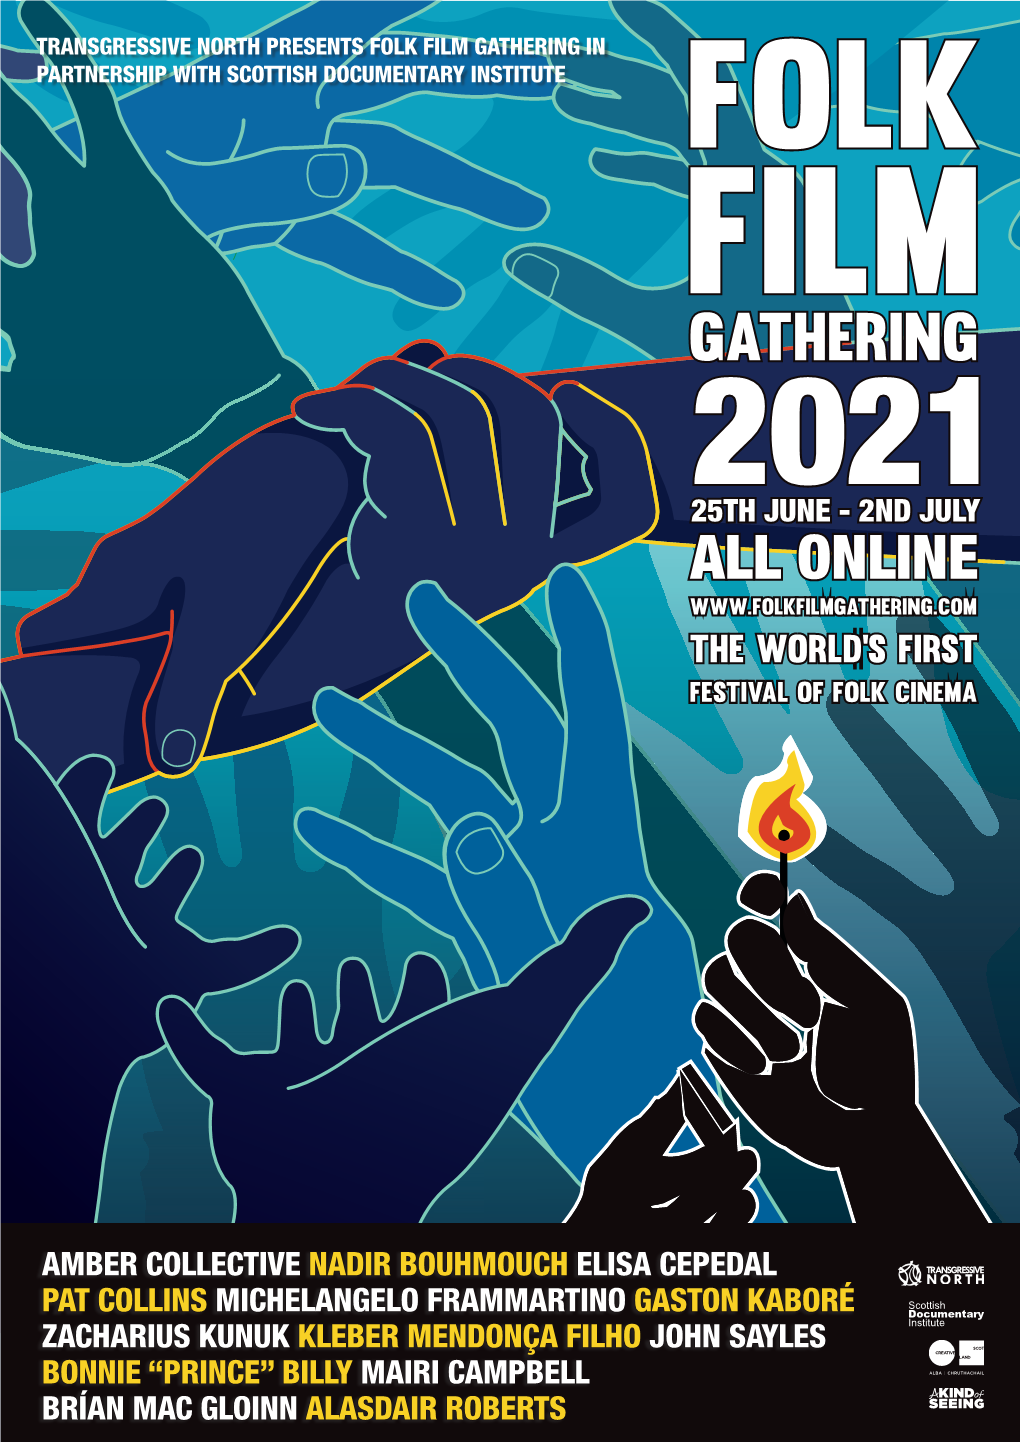 To Download the Full Folk Film Gathering 2021 Programme Brochure